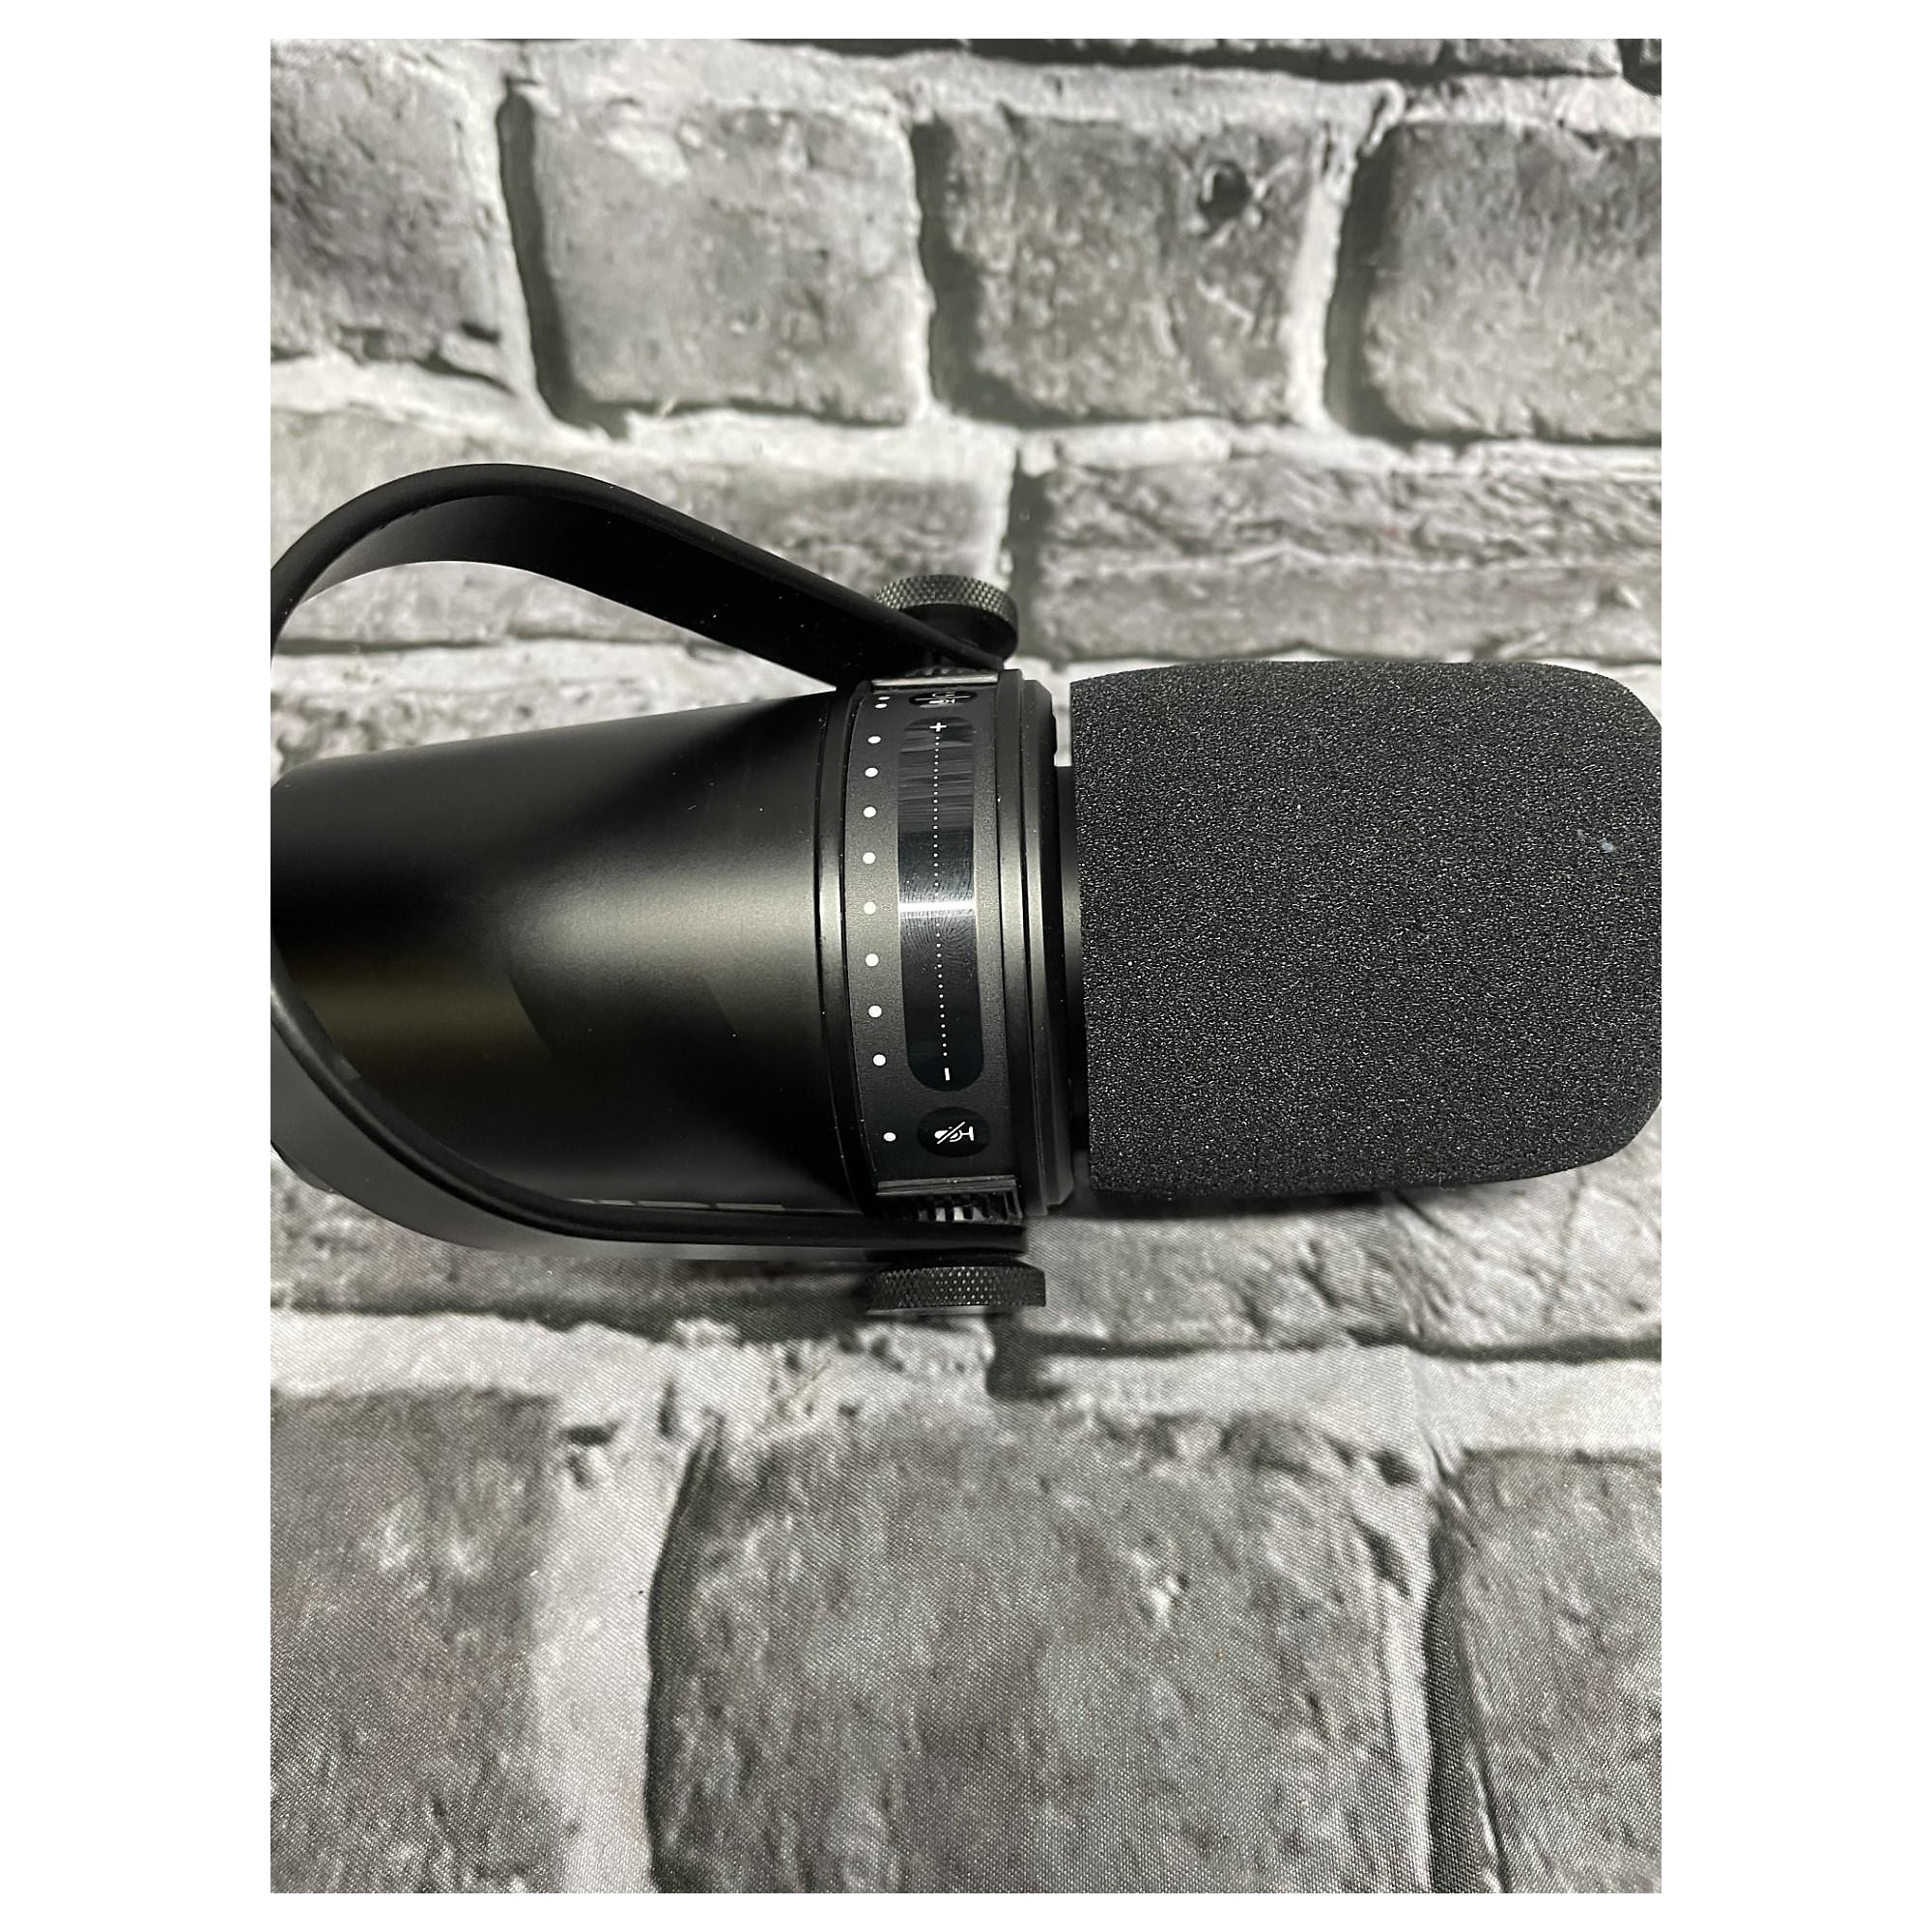 Shure MV7 USB and XLR Dynamic Microphone